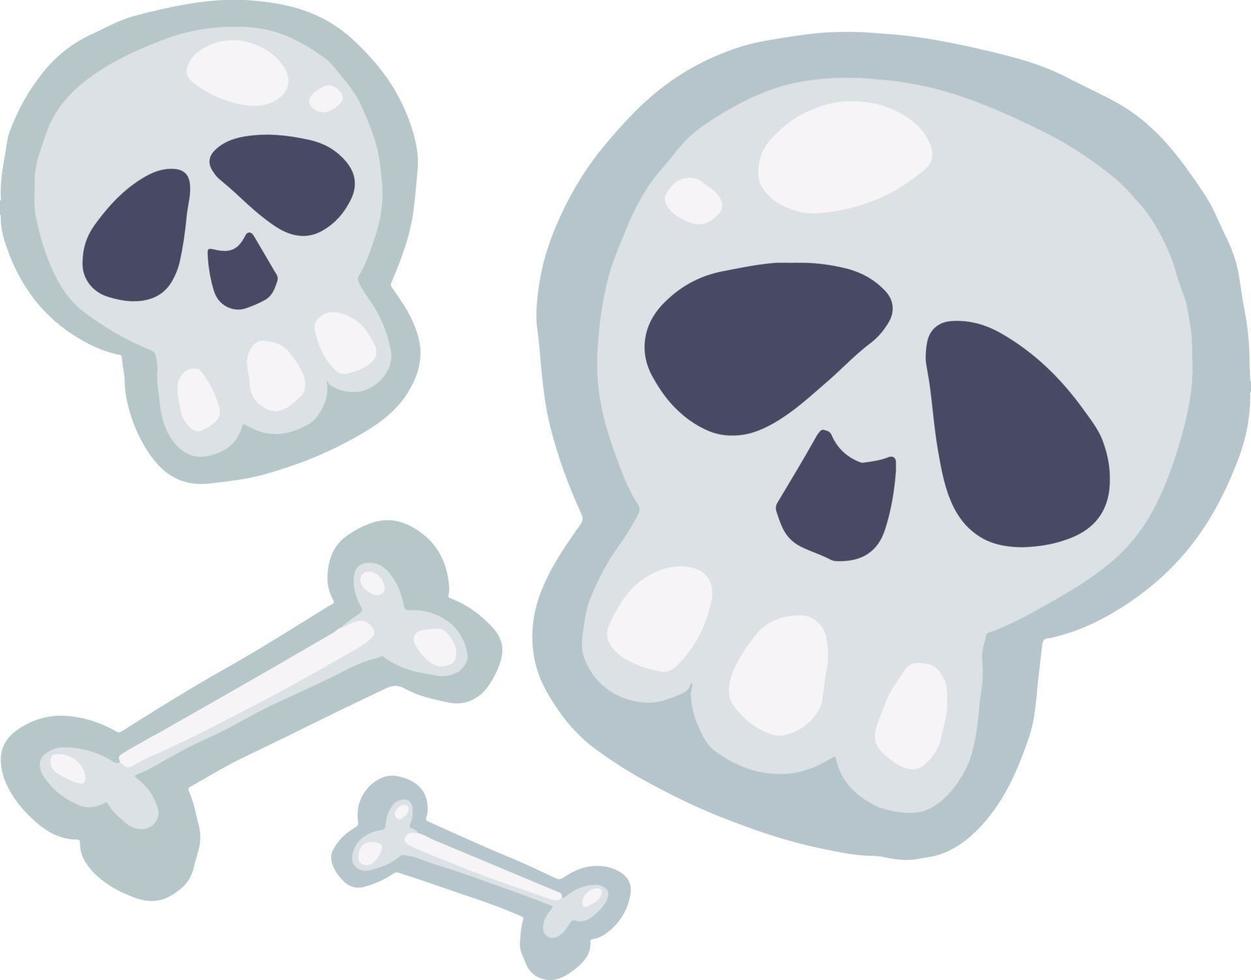 Skulls and bones for halloween and horror movie vector